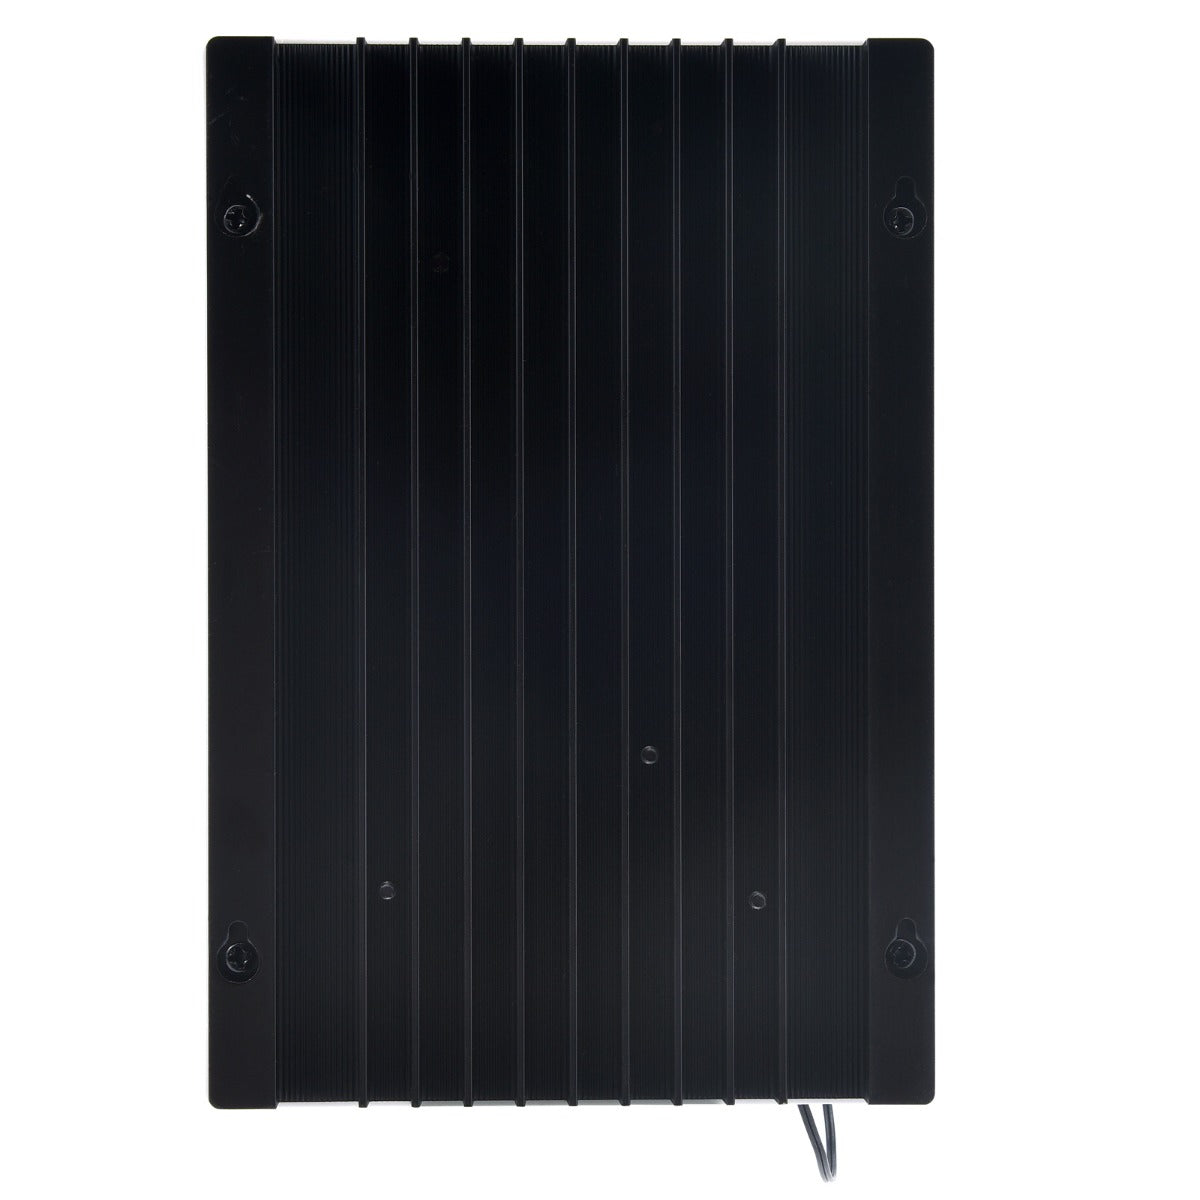 12V/24V 30A MPPT Solar Panel Battery Regulator Charge Controller - Auto LCD